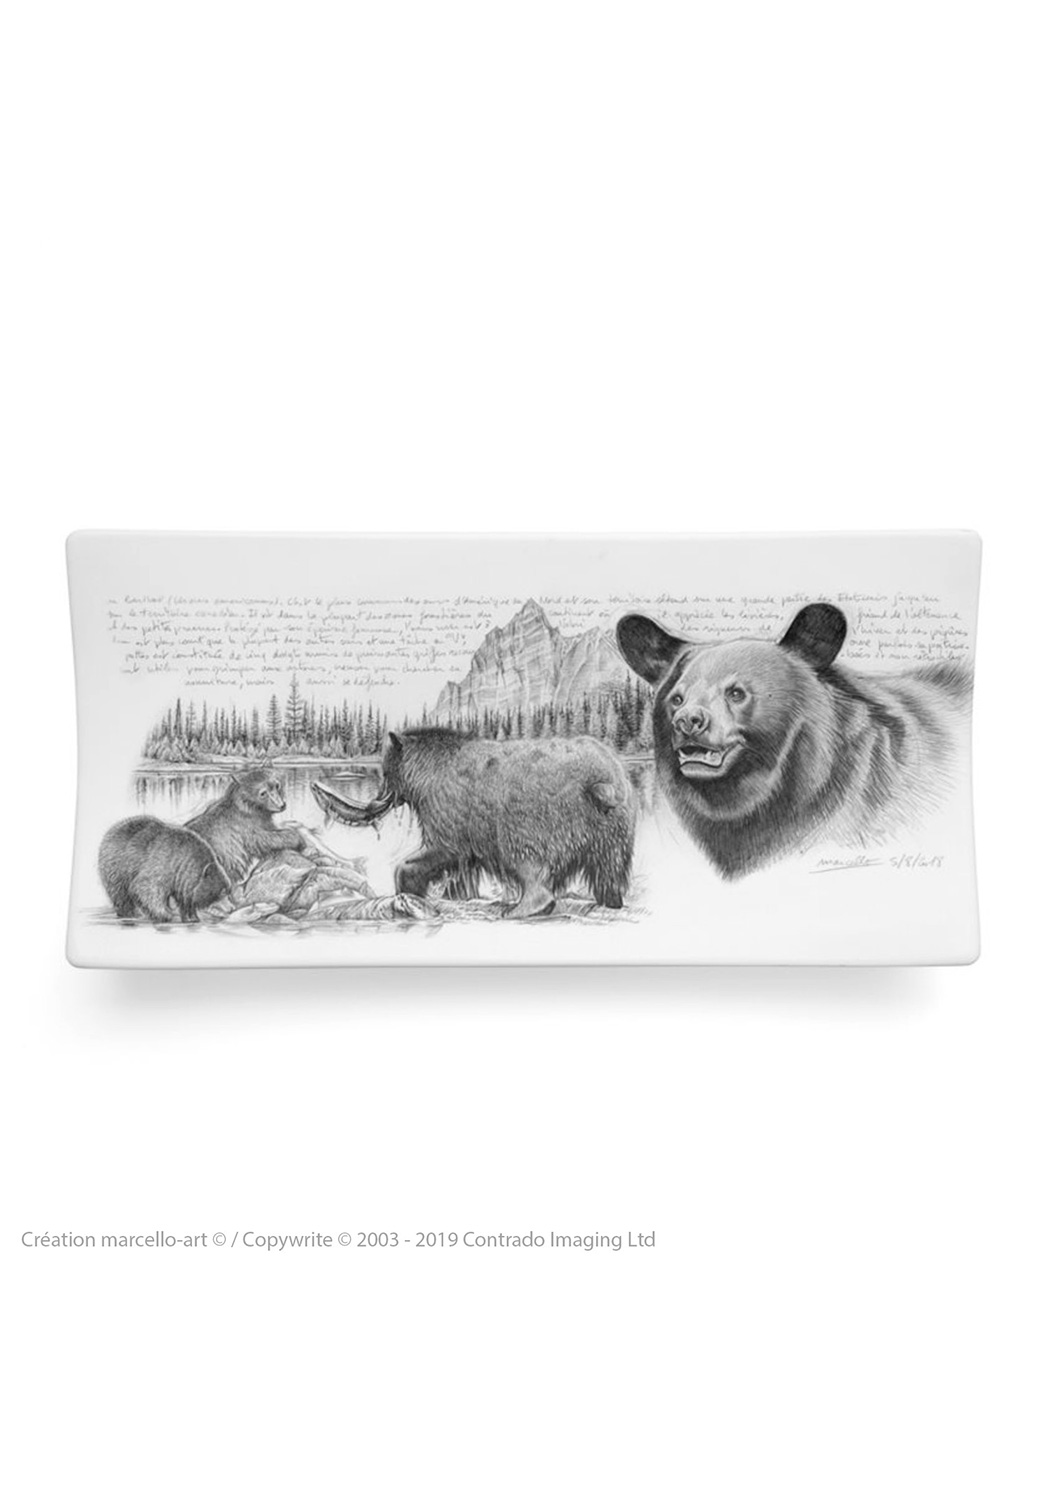 Marcello-art: Rectangular plates Rectangular plate 382 black bear